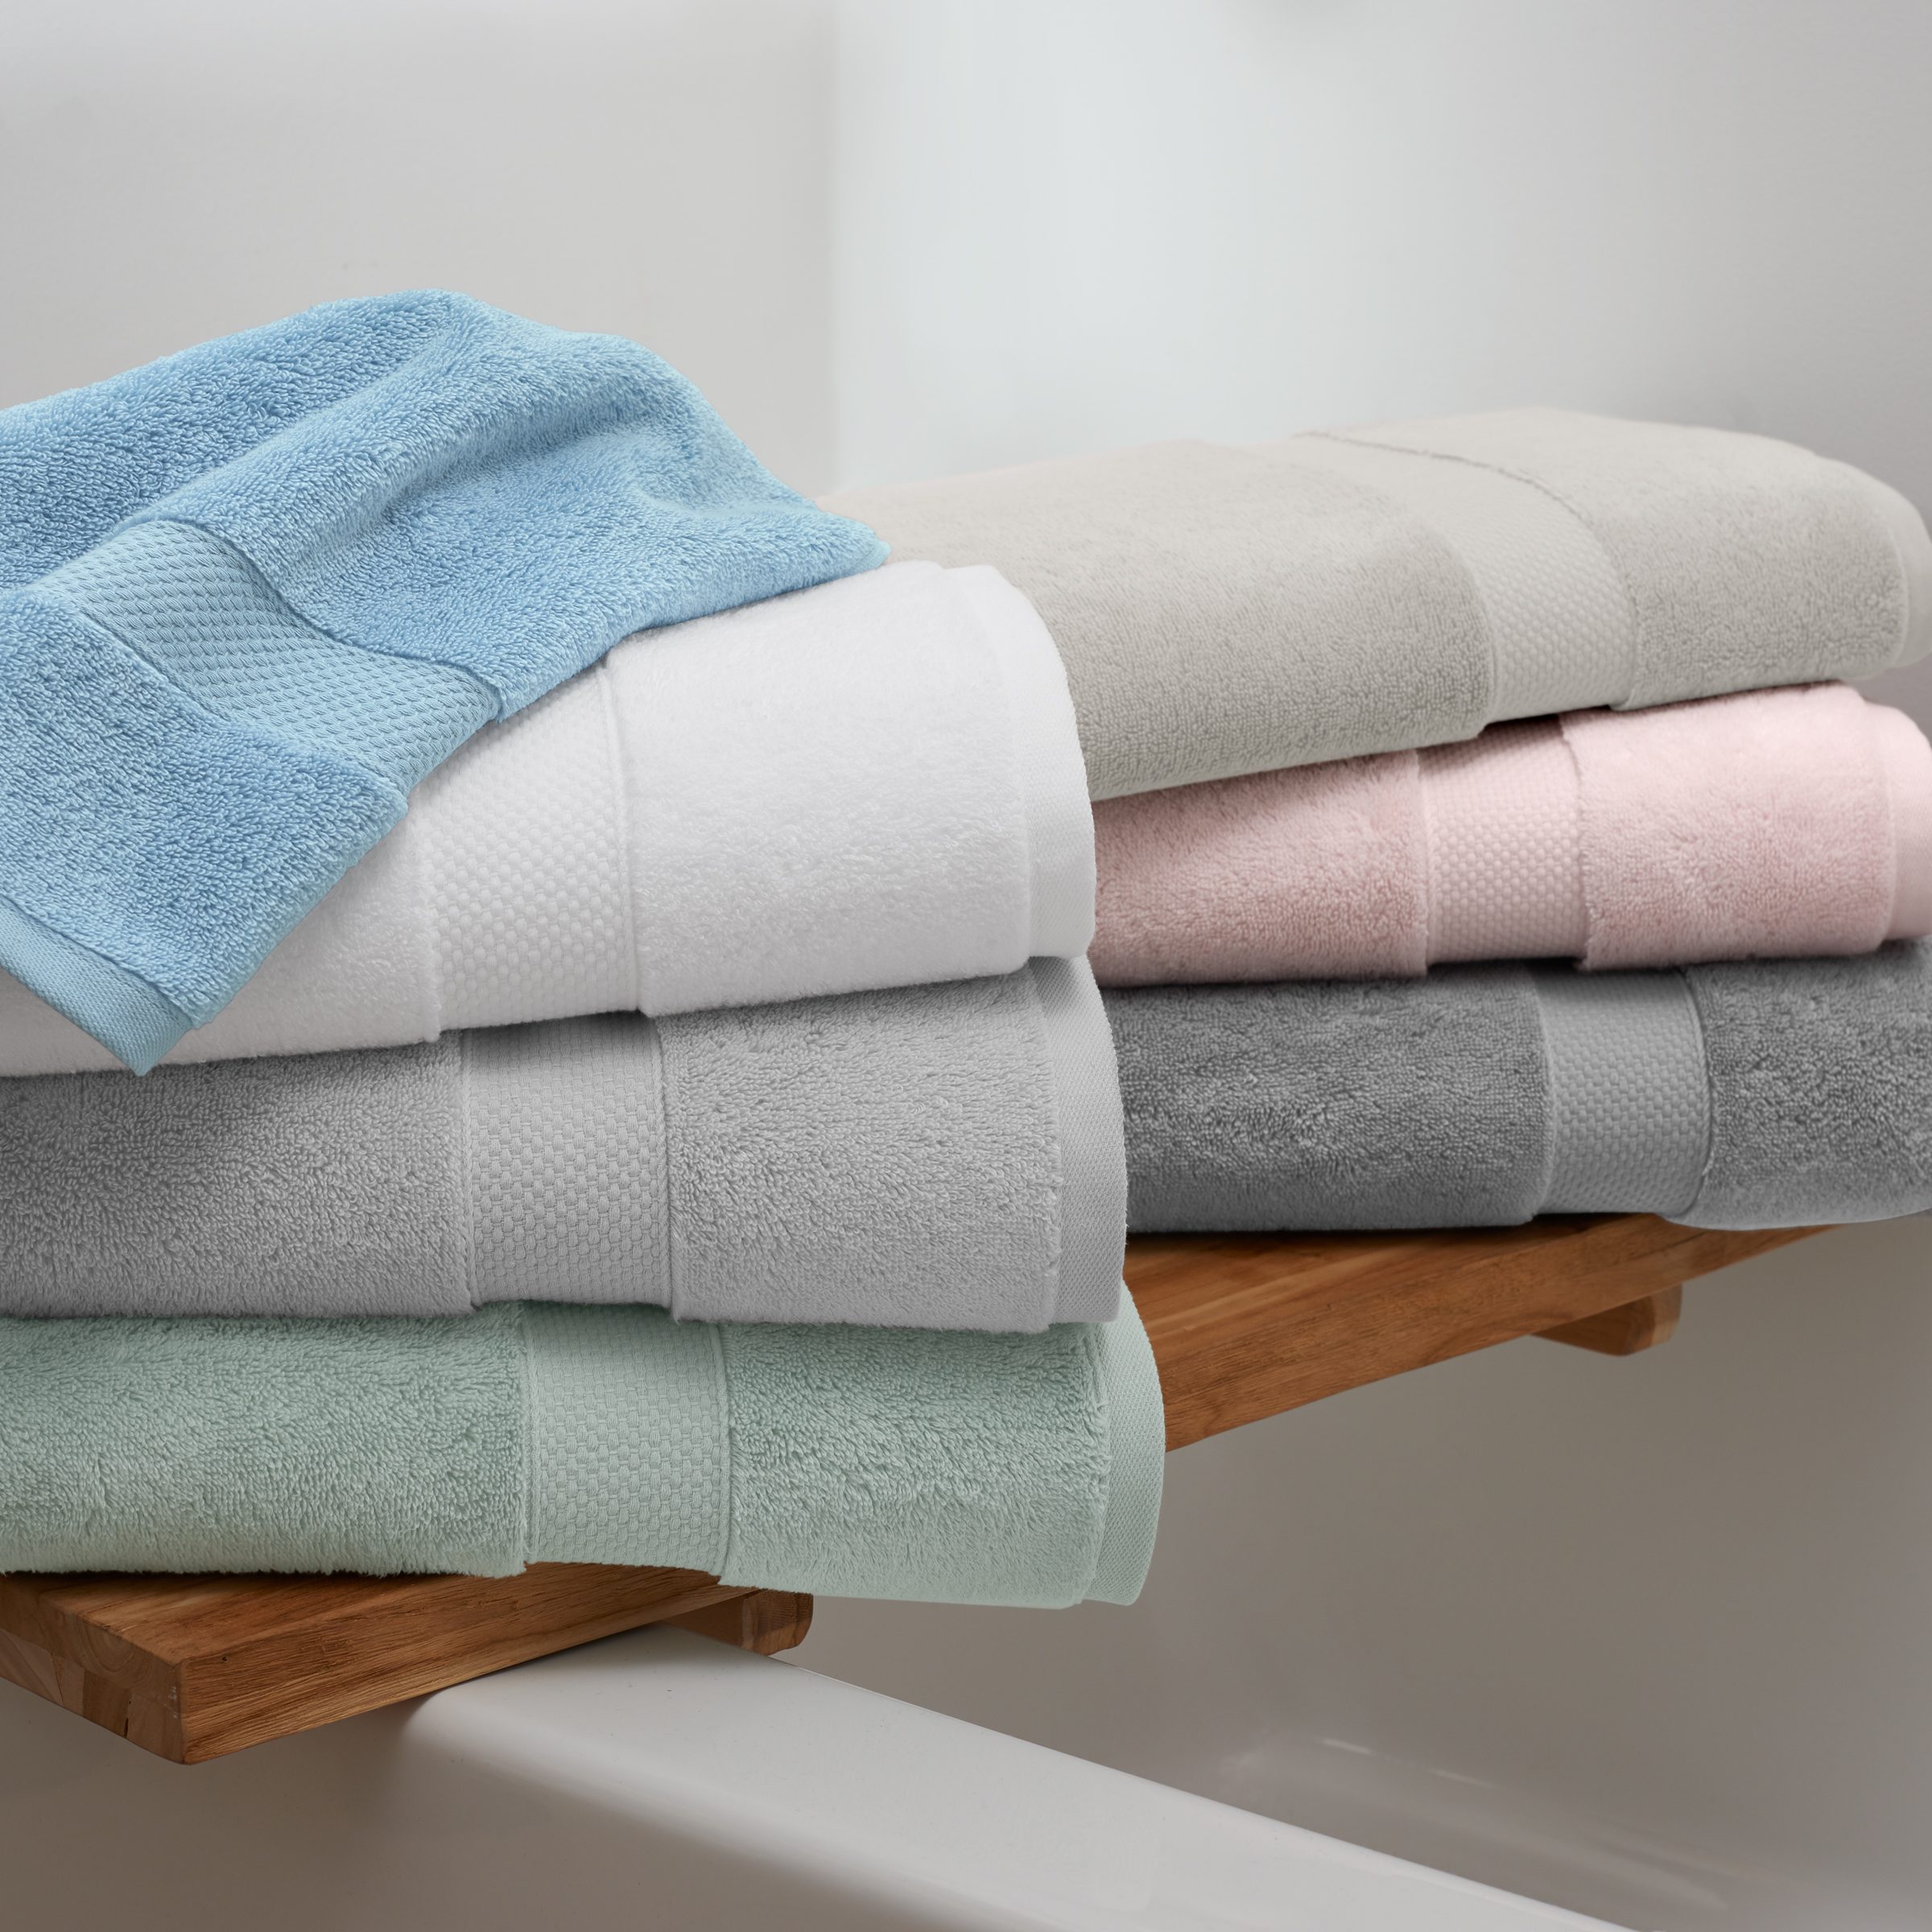 The Premium Plush Bath Sheets Light Grey